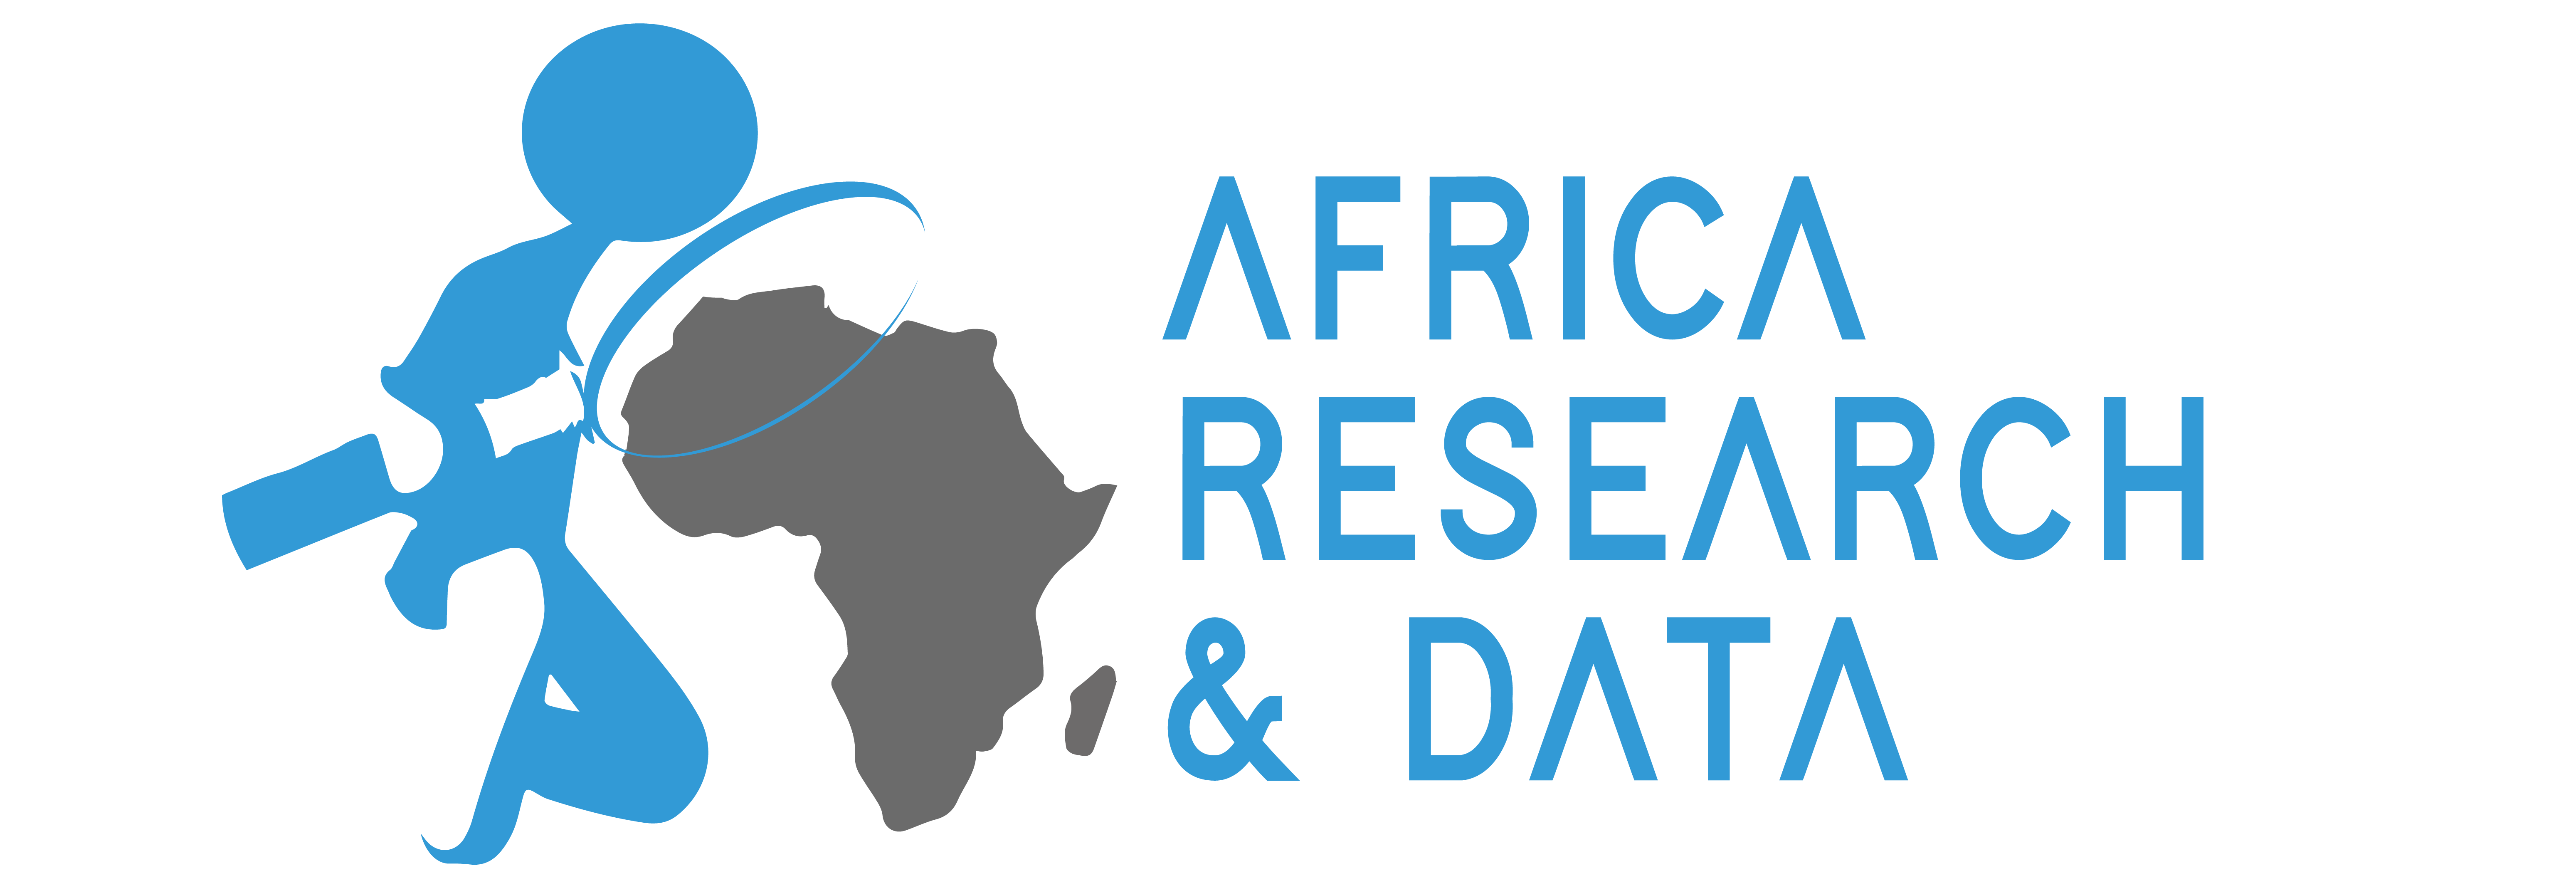 Africa Research & Data